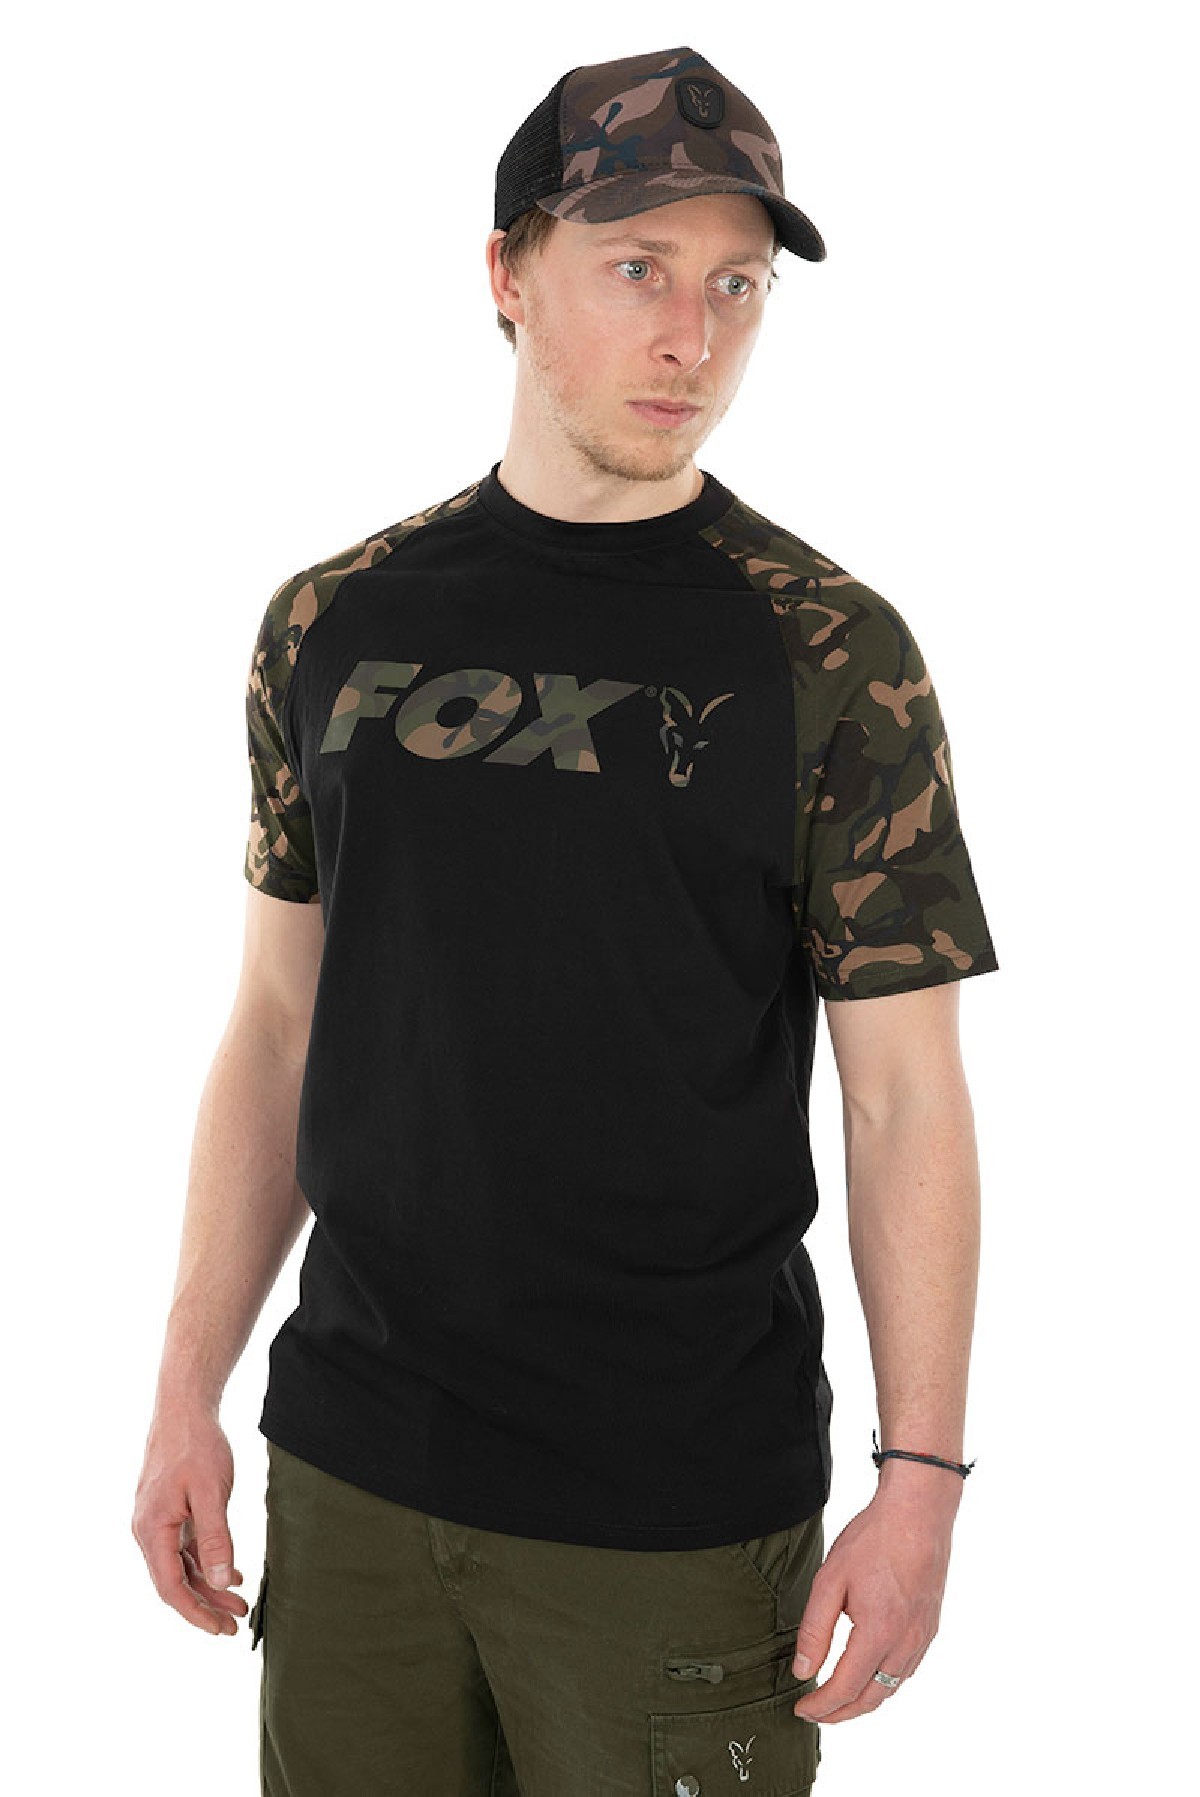 Fox Black / Camo Raglan T-Shirt XX-Large